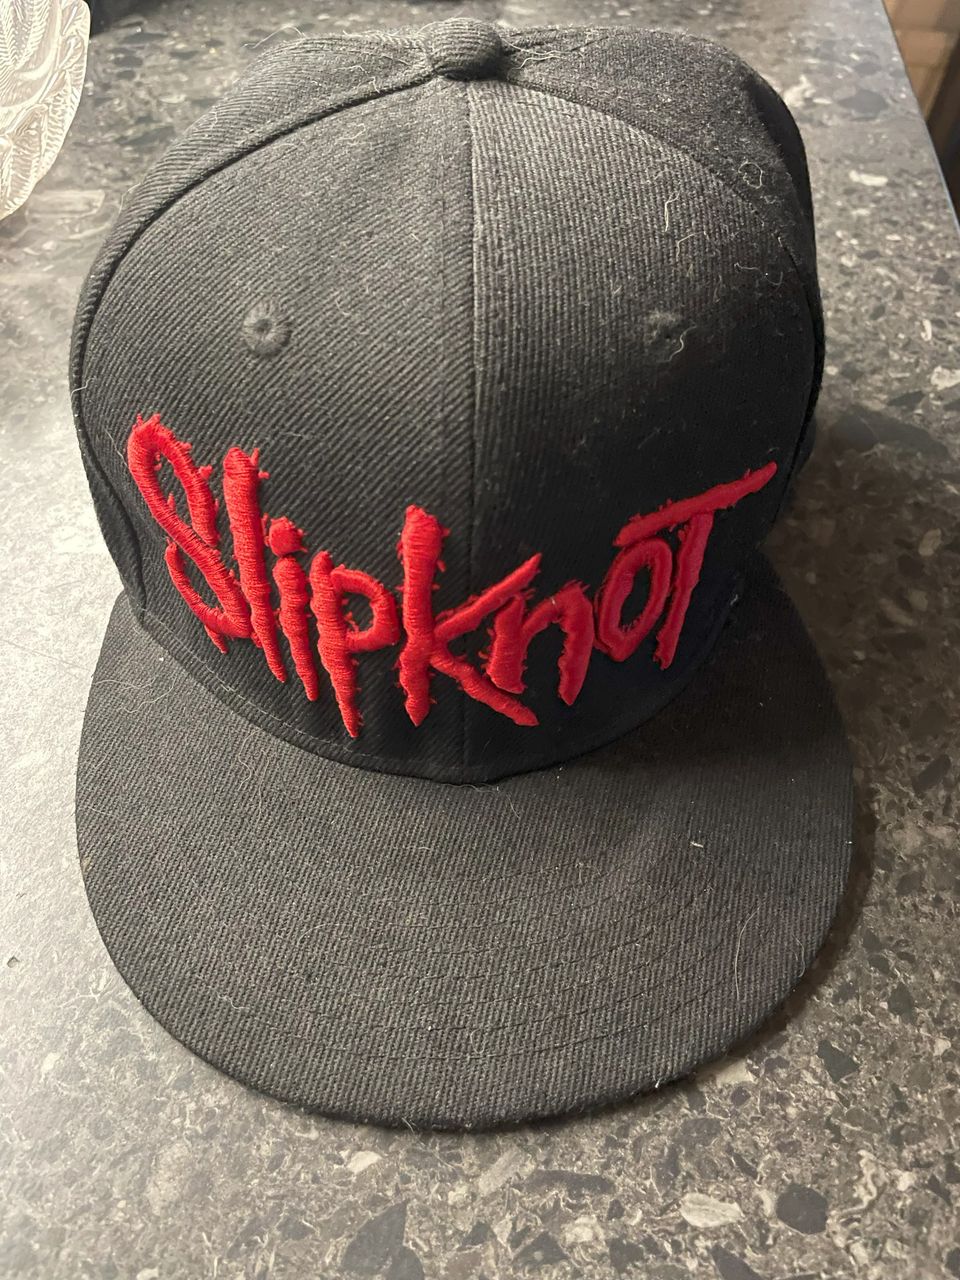 Slipknot hattu